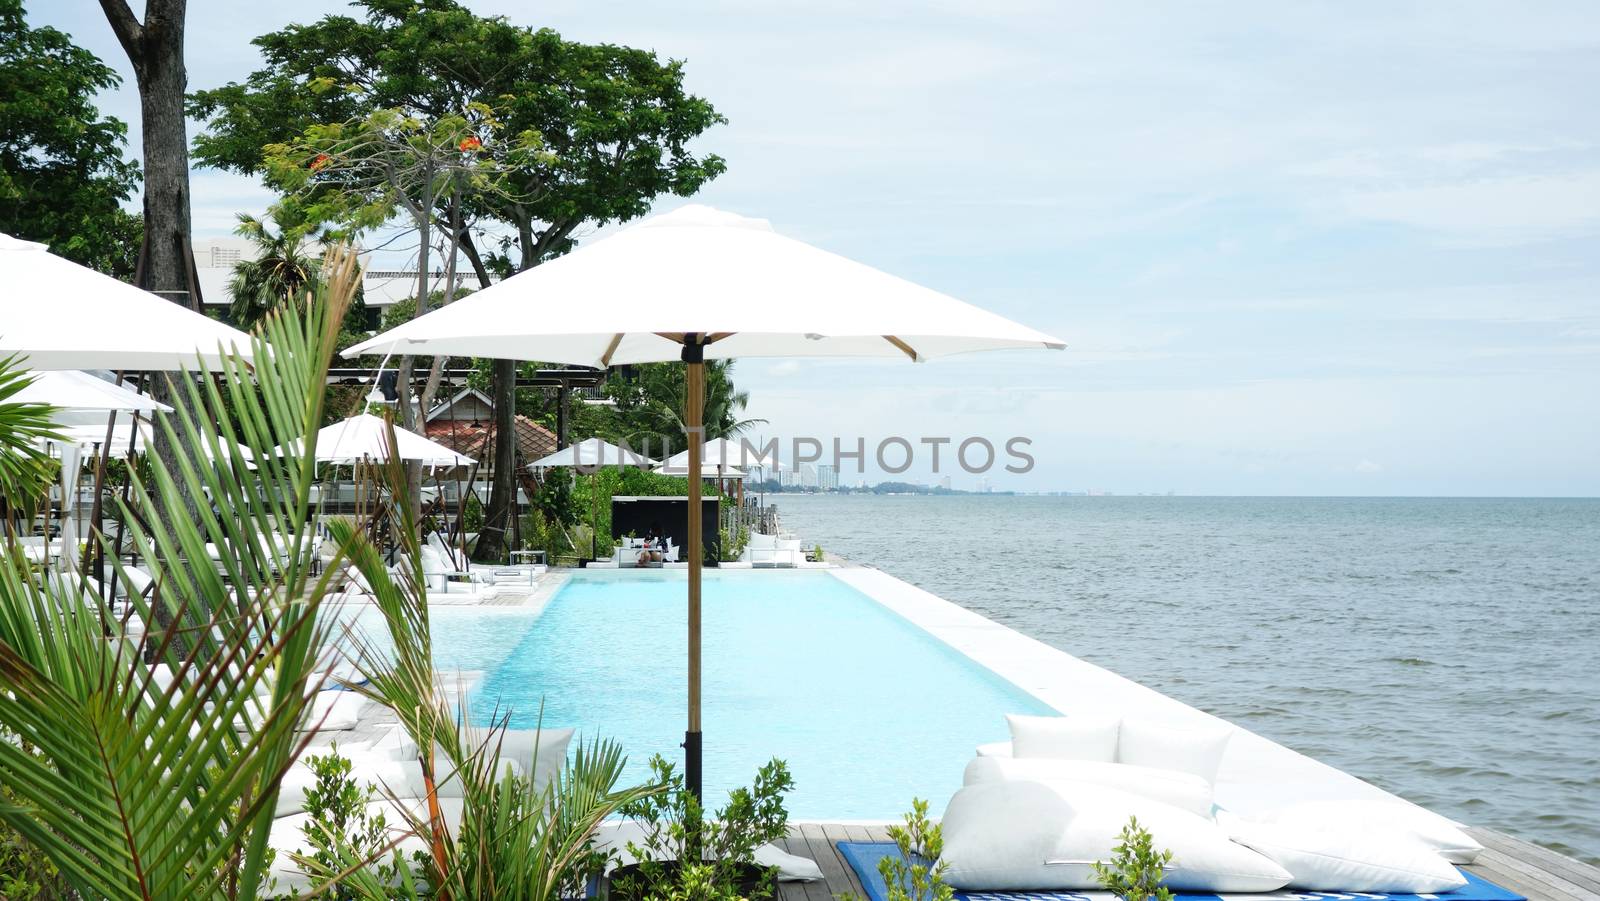 Swimming pool and cafe bar near the beach. Luxury cafe restaurant on Swimming pool bar at the seaside blue ocean.